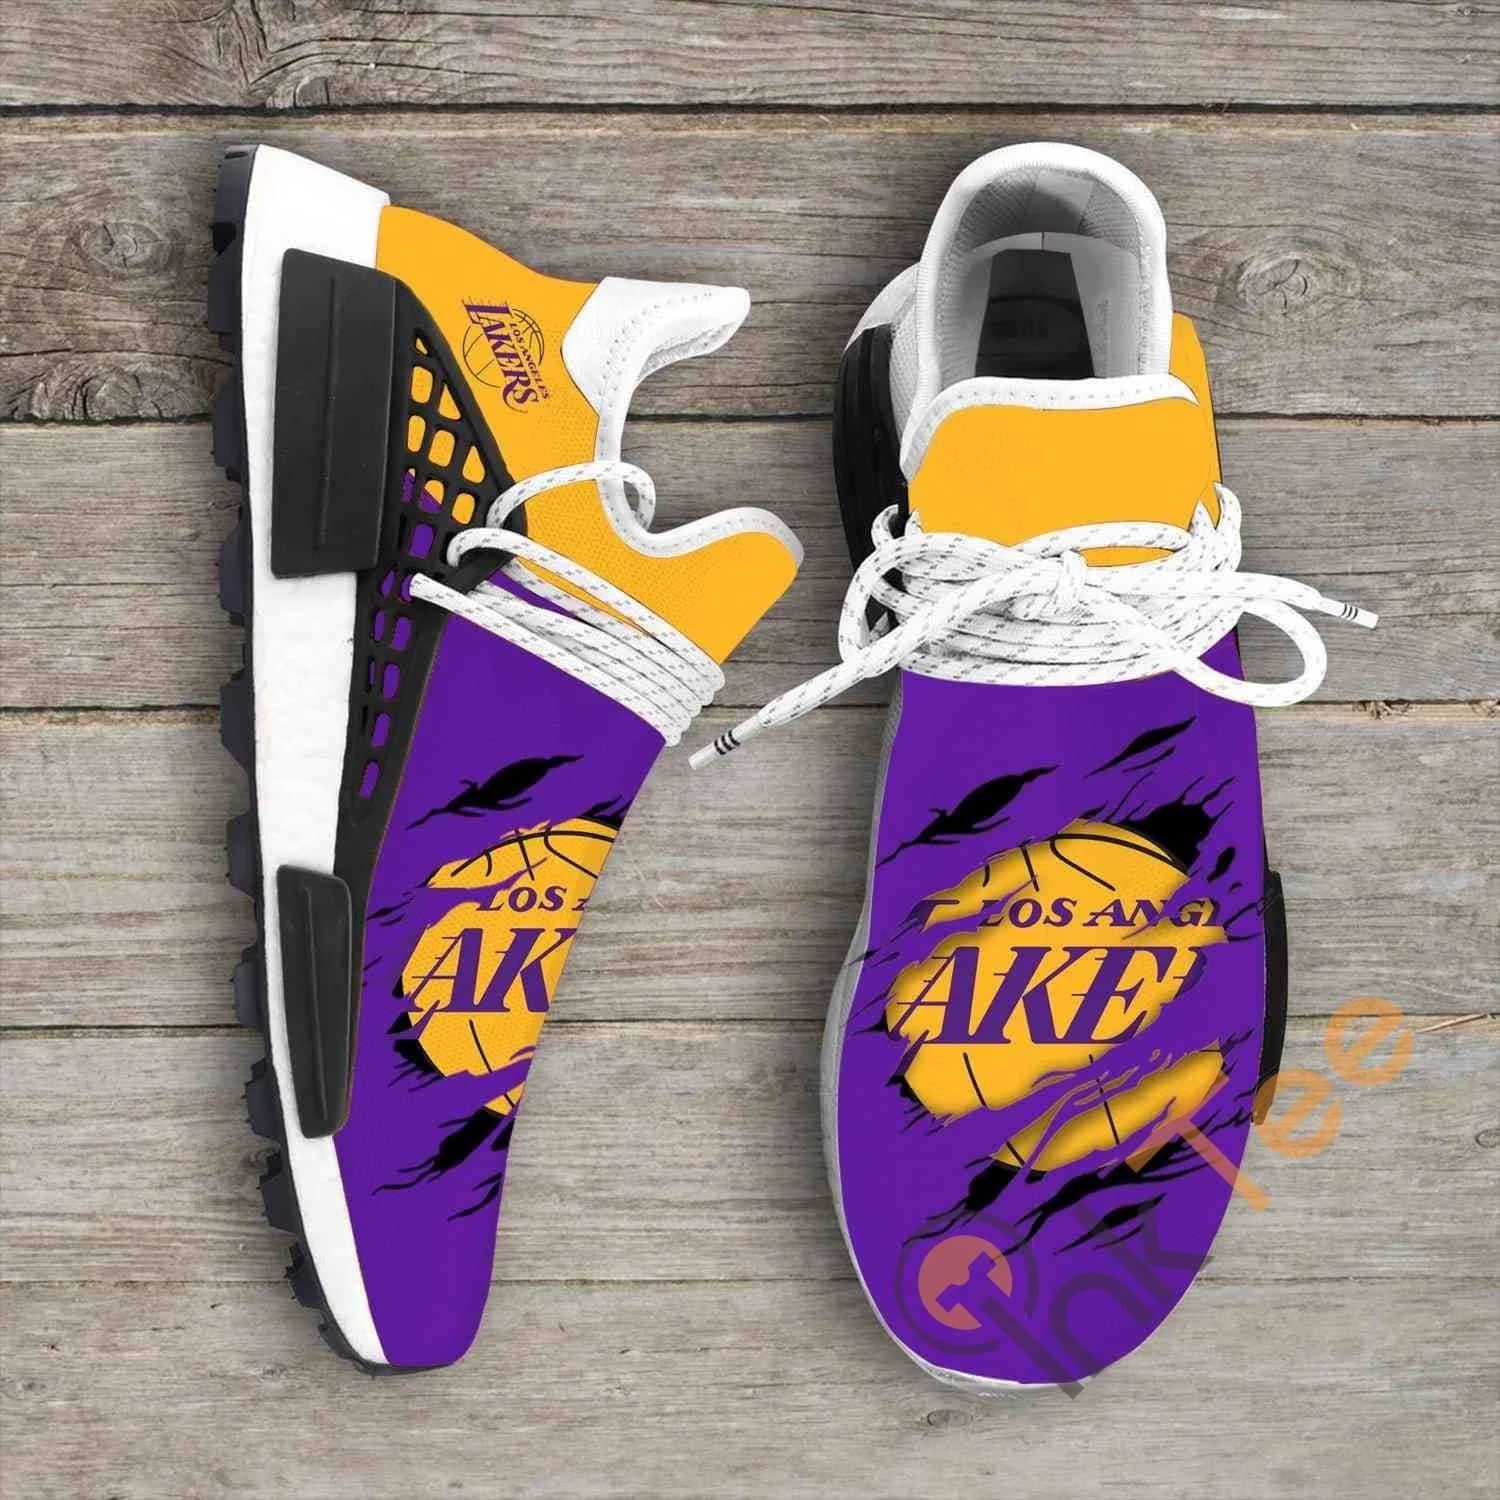 Los Angeles Lakers Nba Ha03 NMD Human Shoes